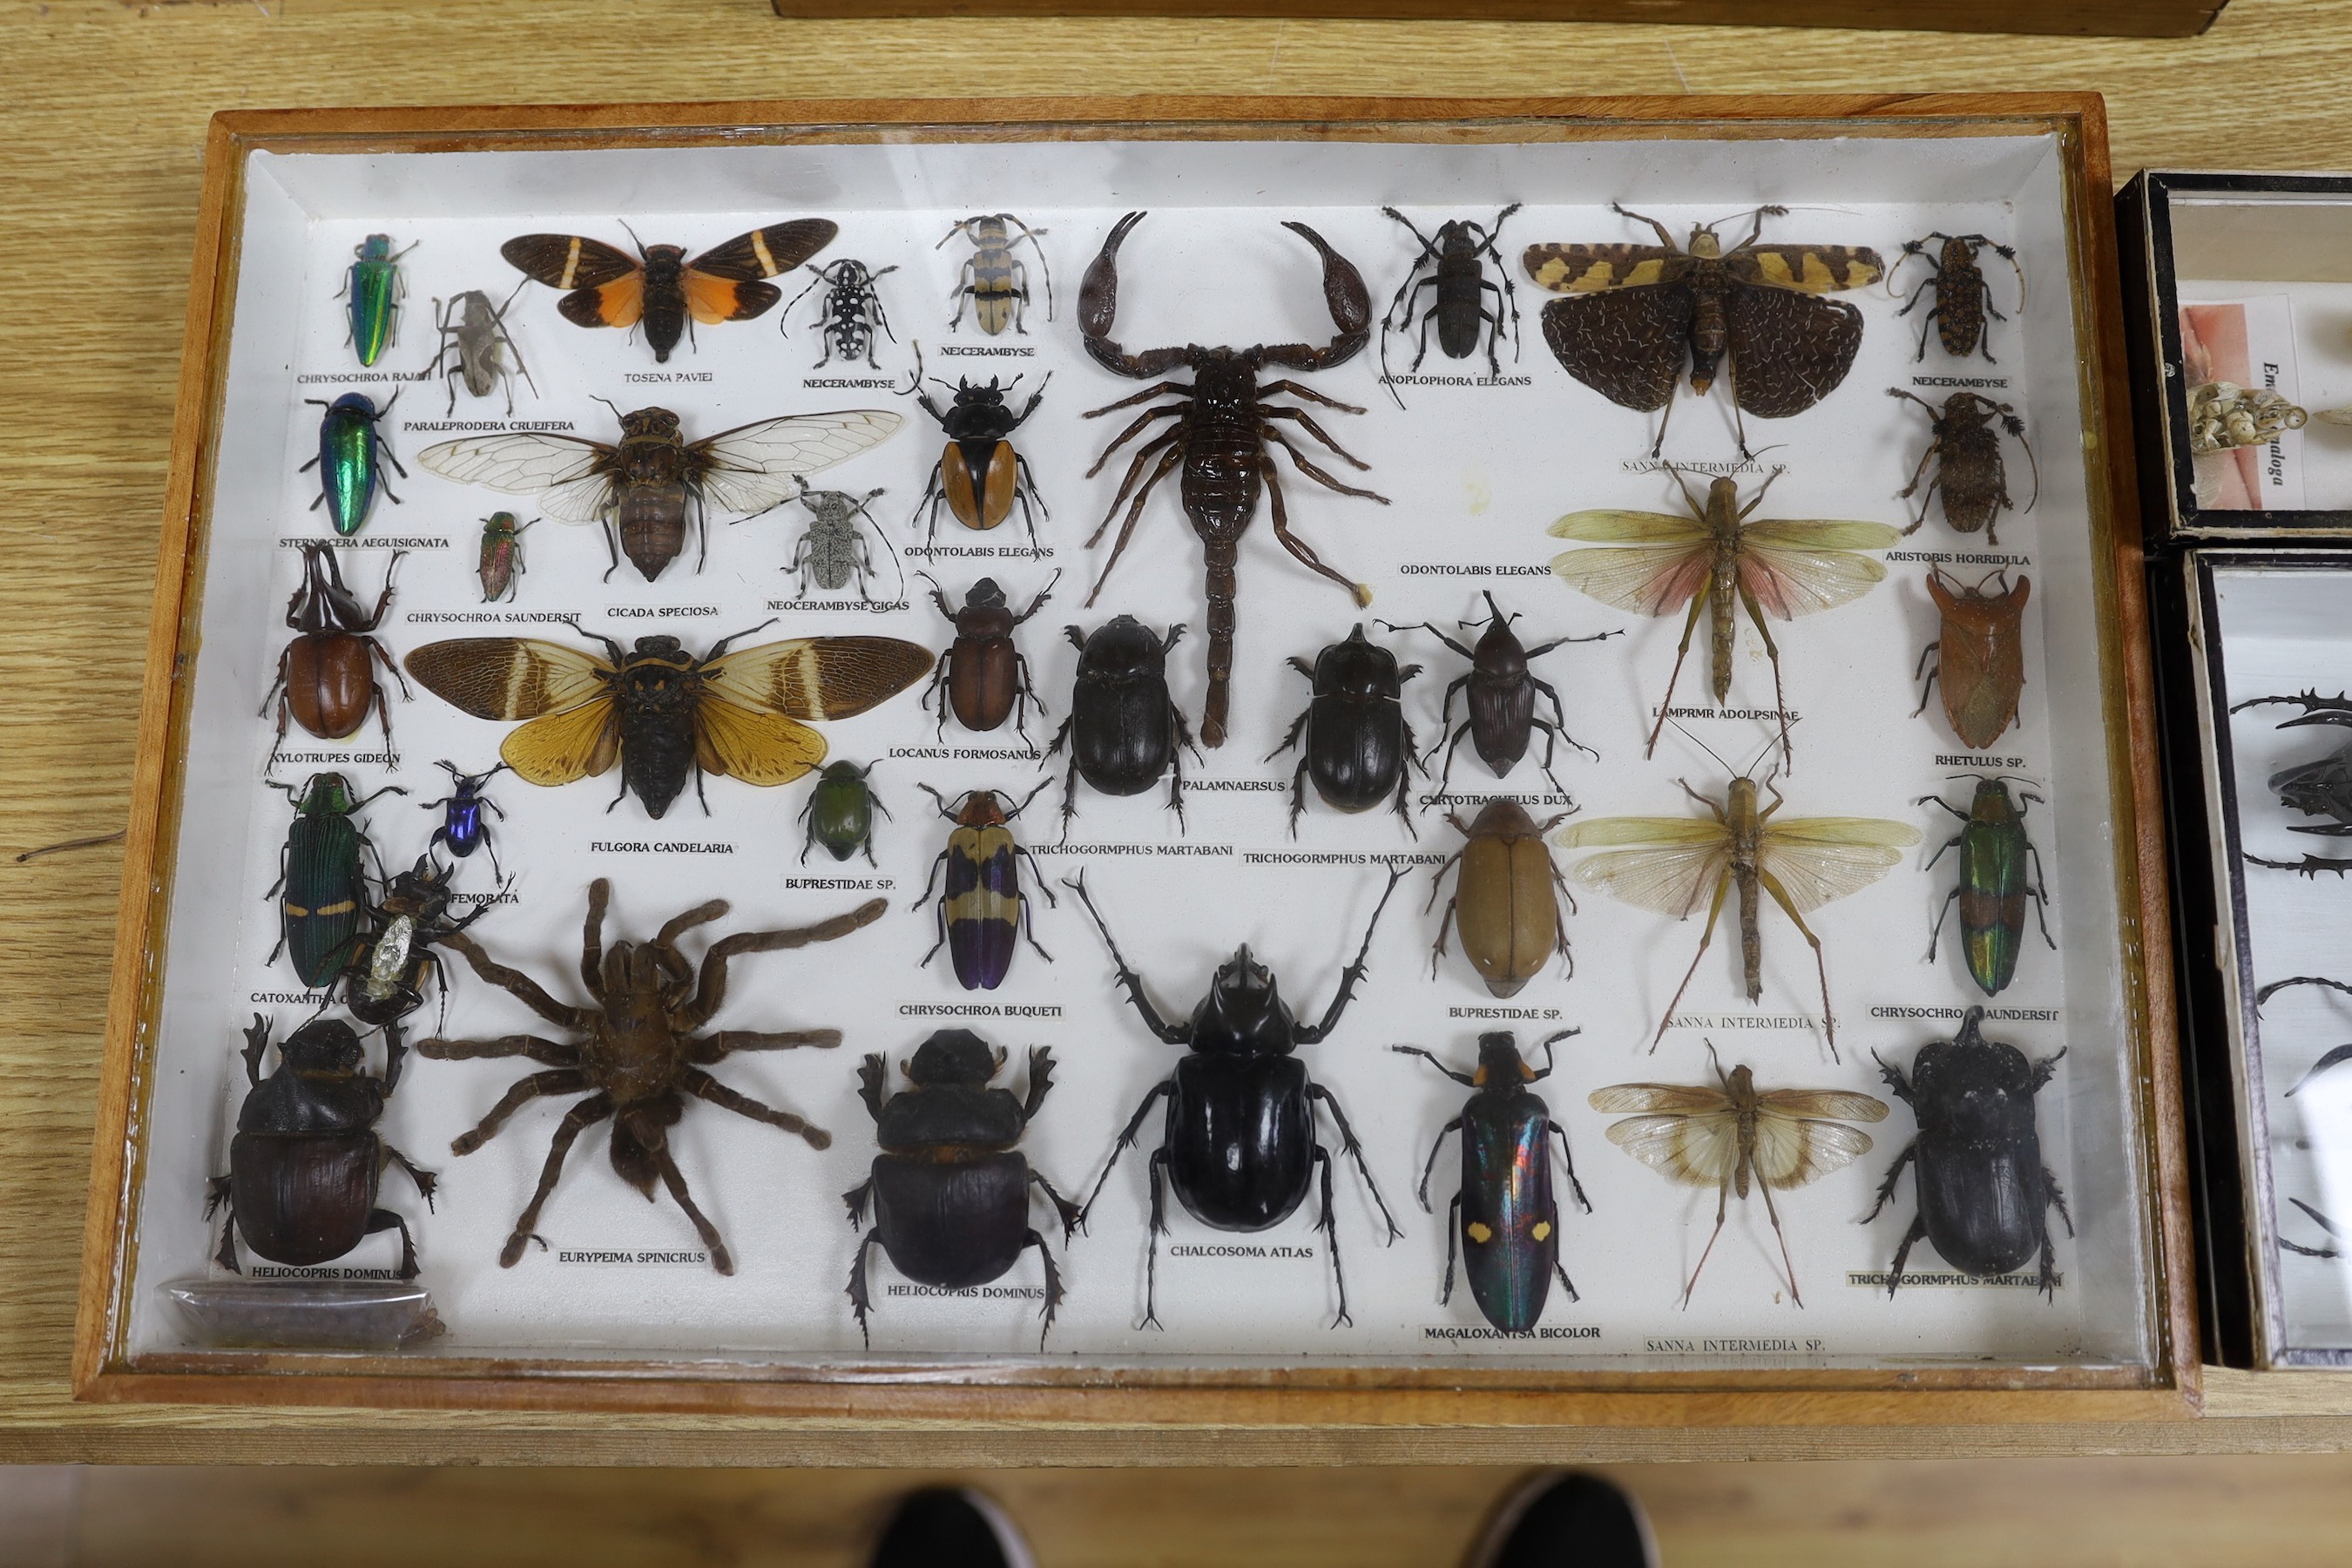 Entomology – a glazed box of Atlas Beetle specimens, 37 cm wide, a glazed case of beetle, grasshopper, cicada, scorpion specimens and a tarantula, 45.5 cm wide and a glazed box of Pacific Mole crabs, 37 cm wide